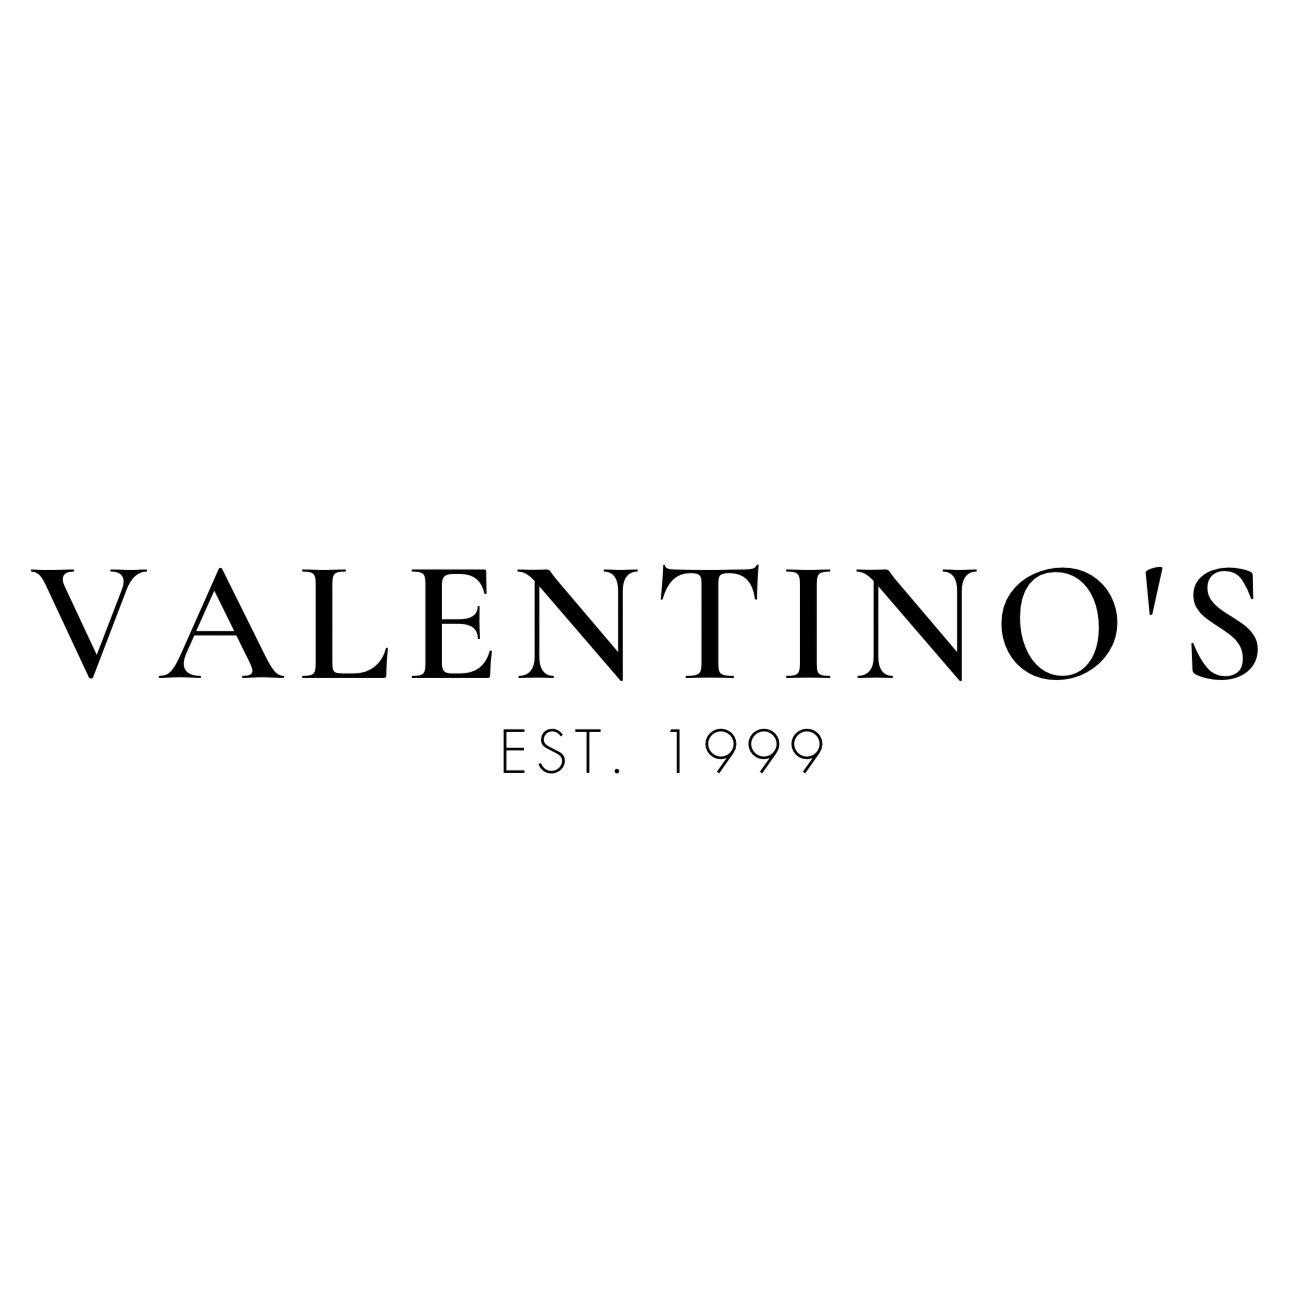 Valentino's Bridal EST. 1999